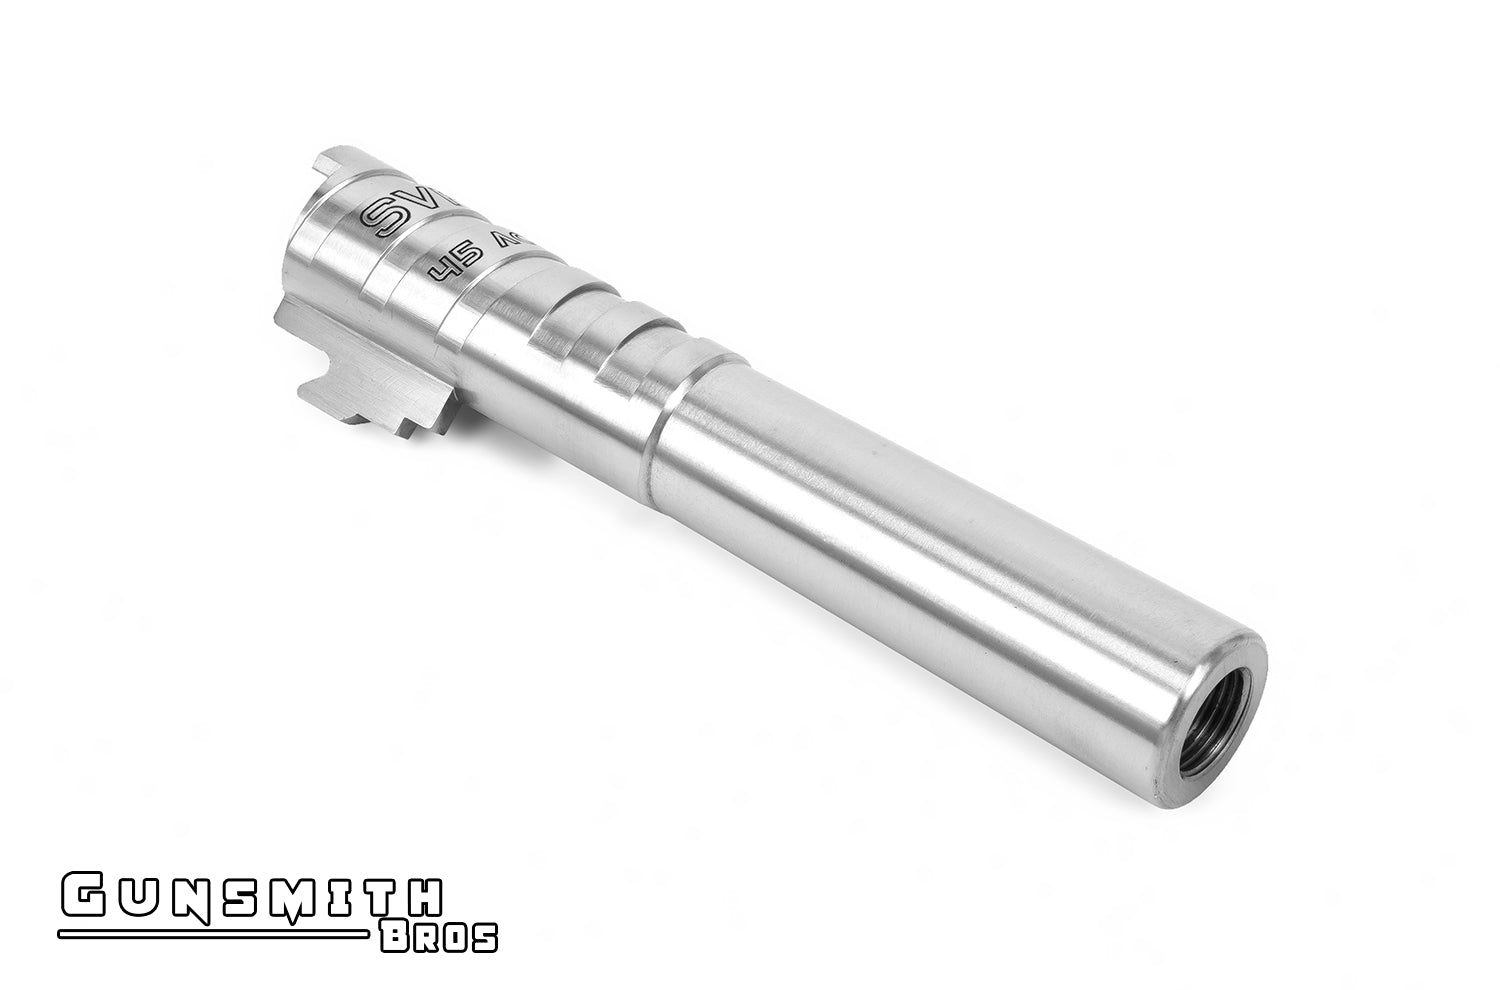 Gunsmith Bros Infinity SVP Steel 4.3 Outer Barrel (Silver / Gold)